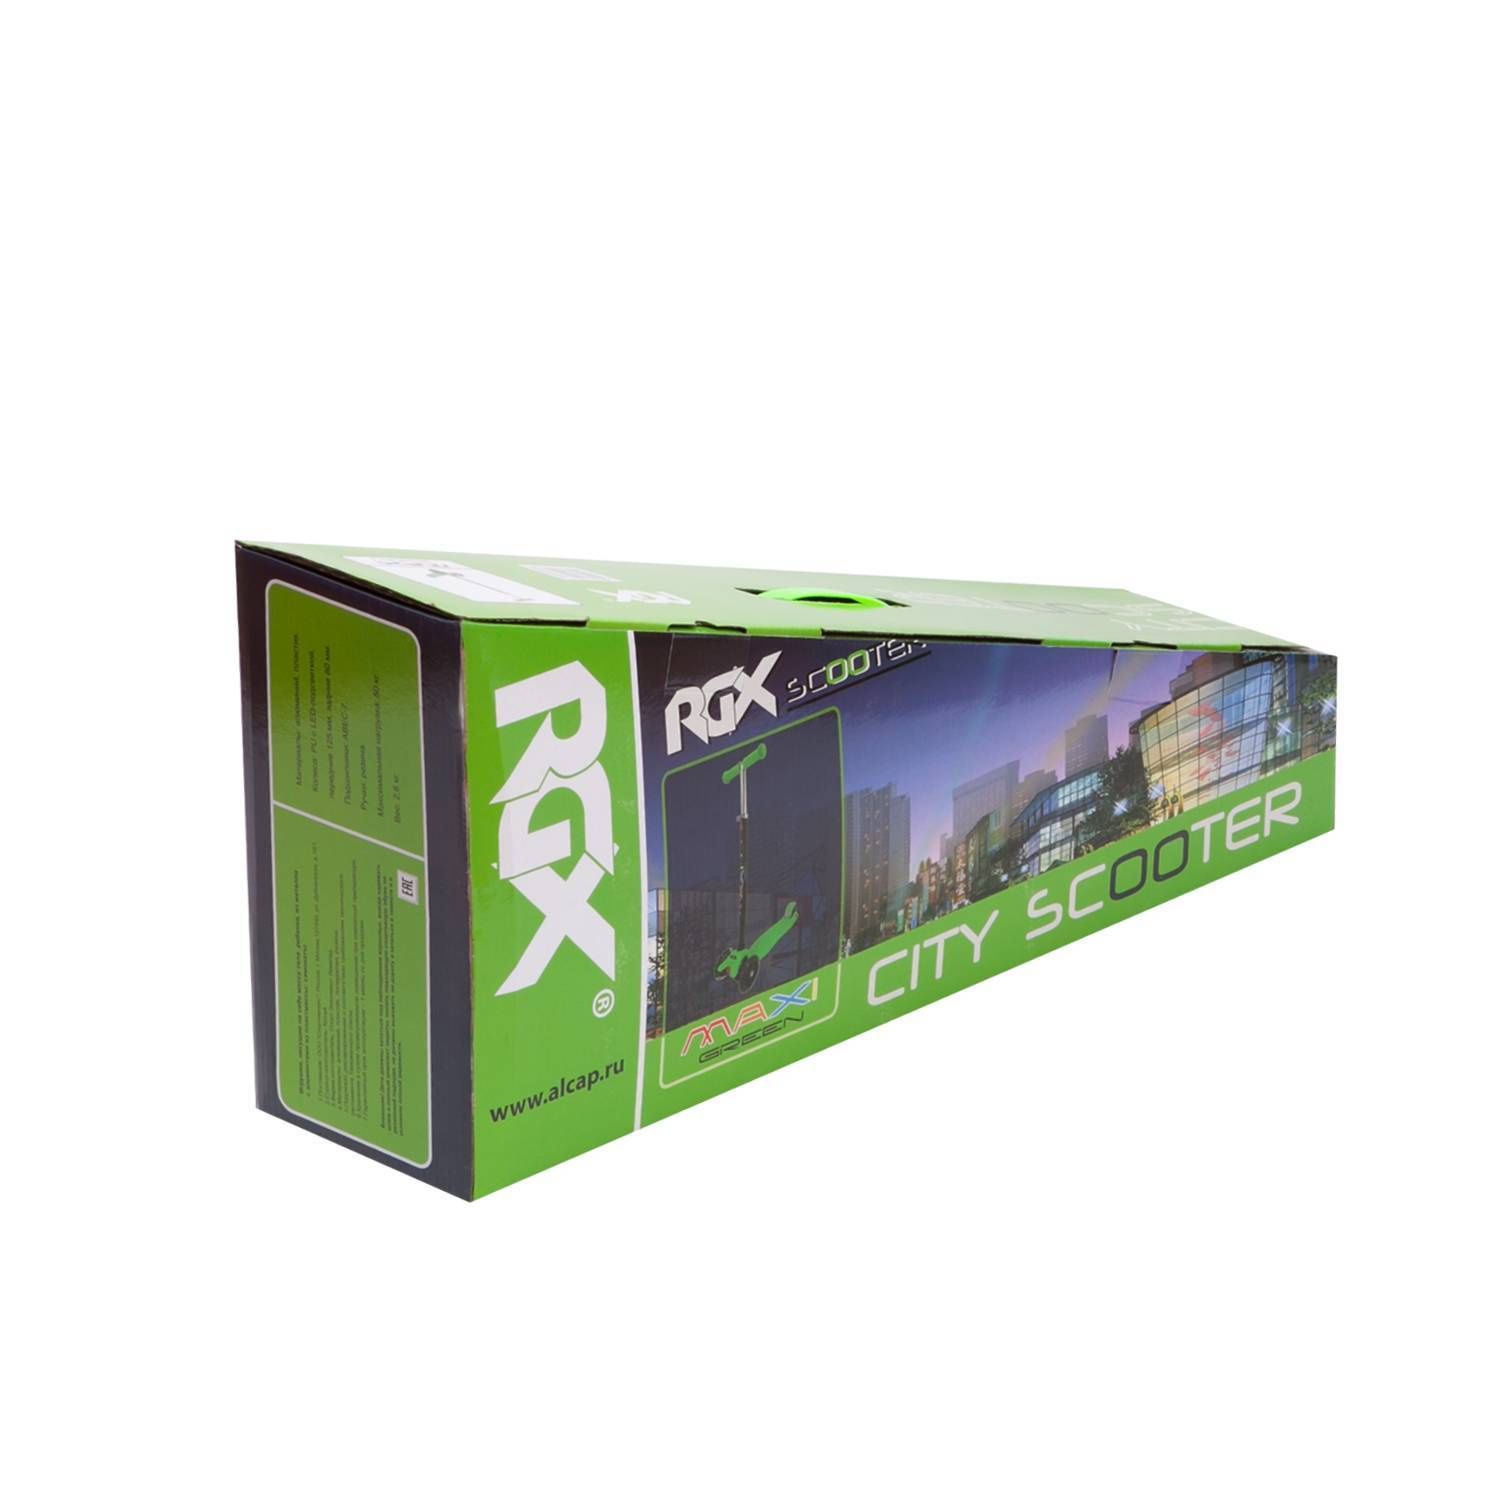  RGX MAXI LED green, 